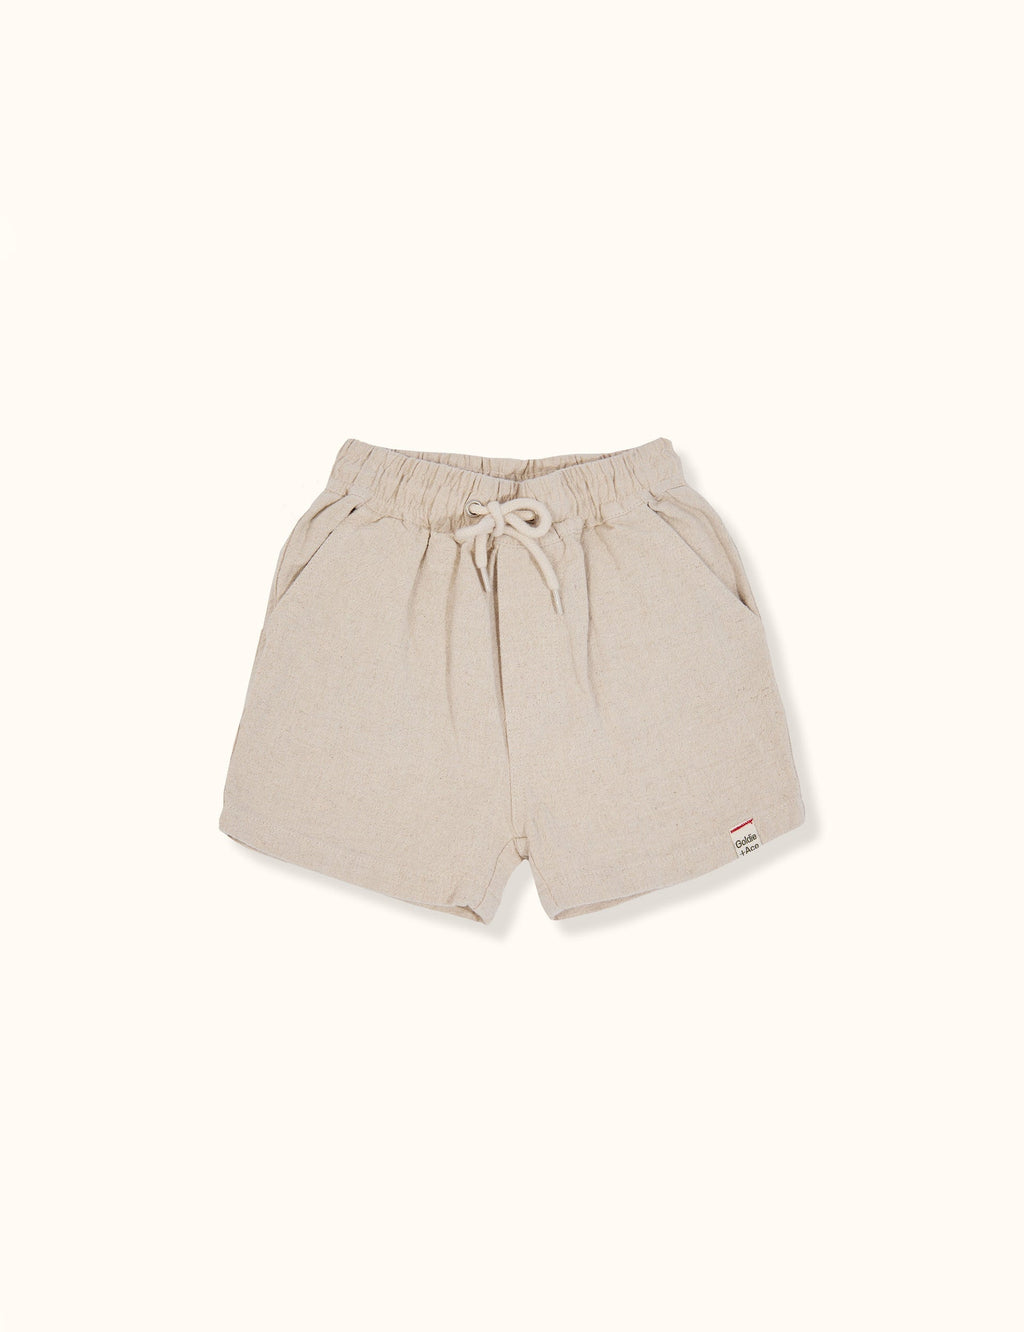 Noah linen cotton shorts- Bone